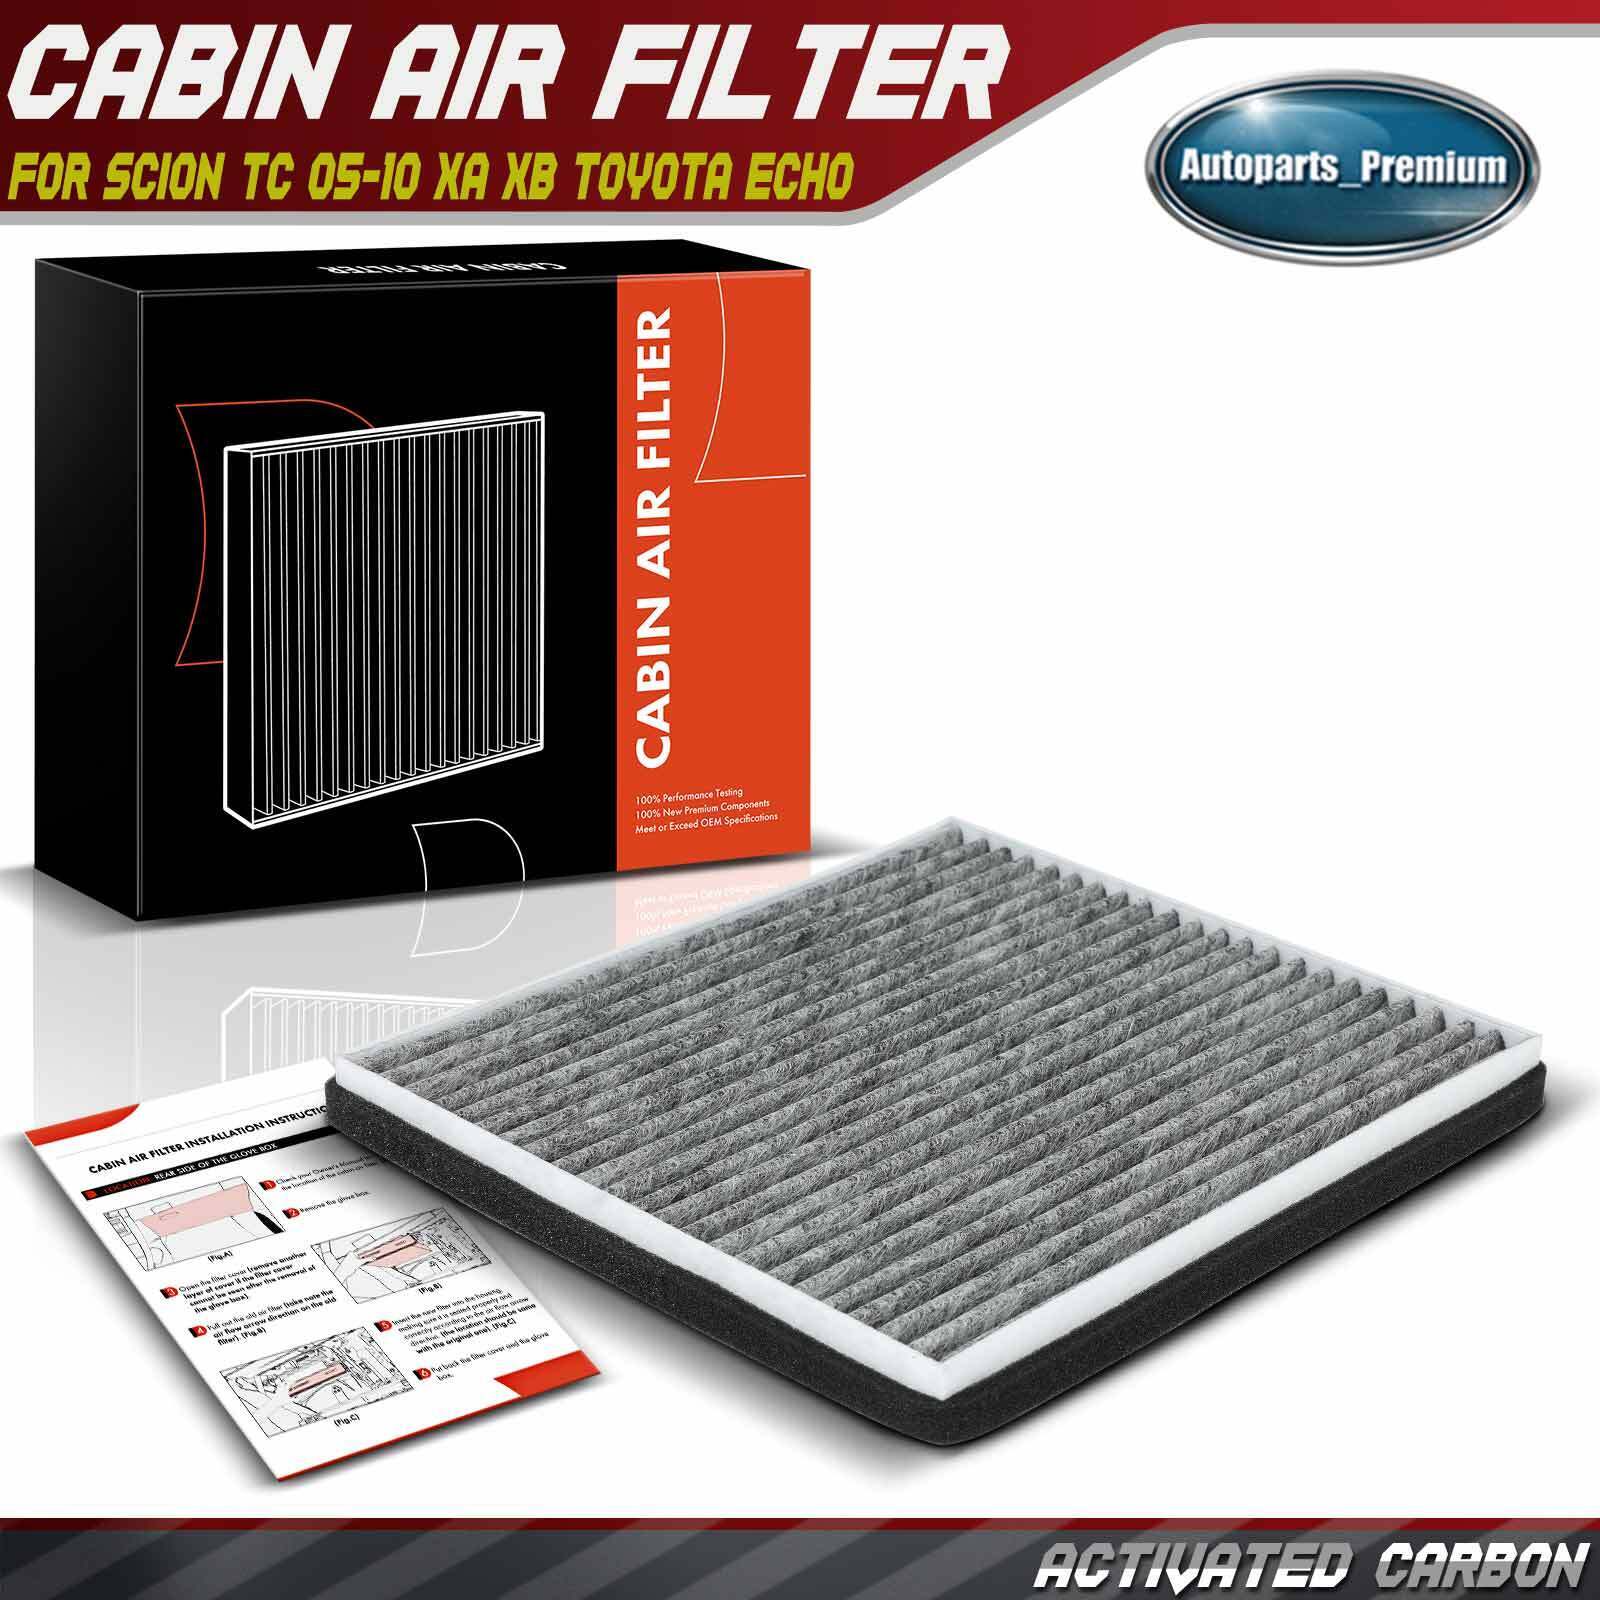 Activated Carbon Cabin Air Filter for Scion tC 05-10 xA Toyota RAV4 01-05 Echo